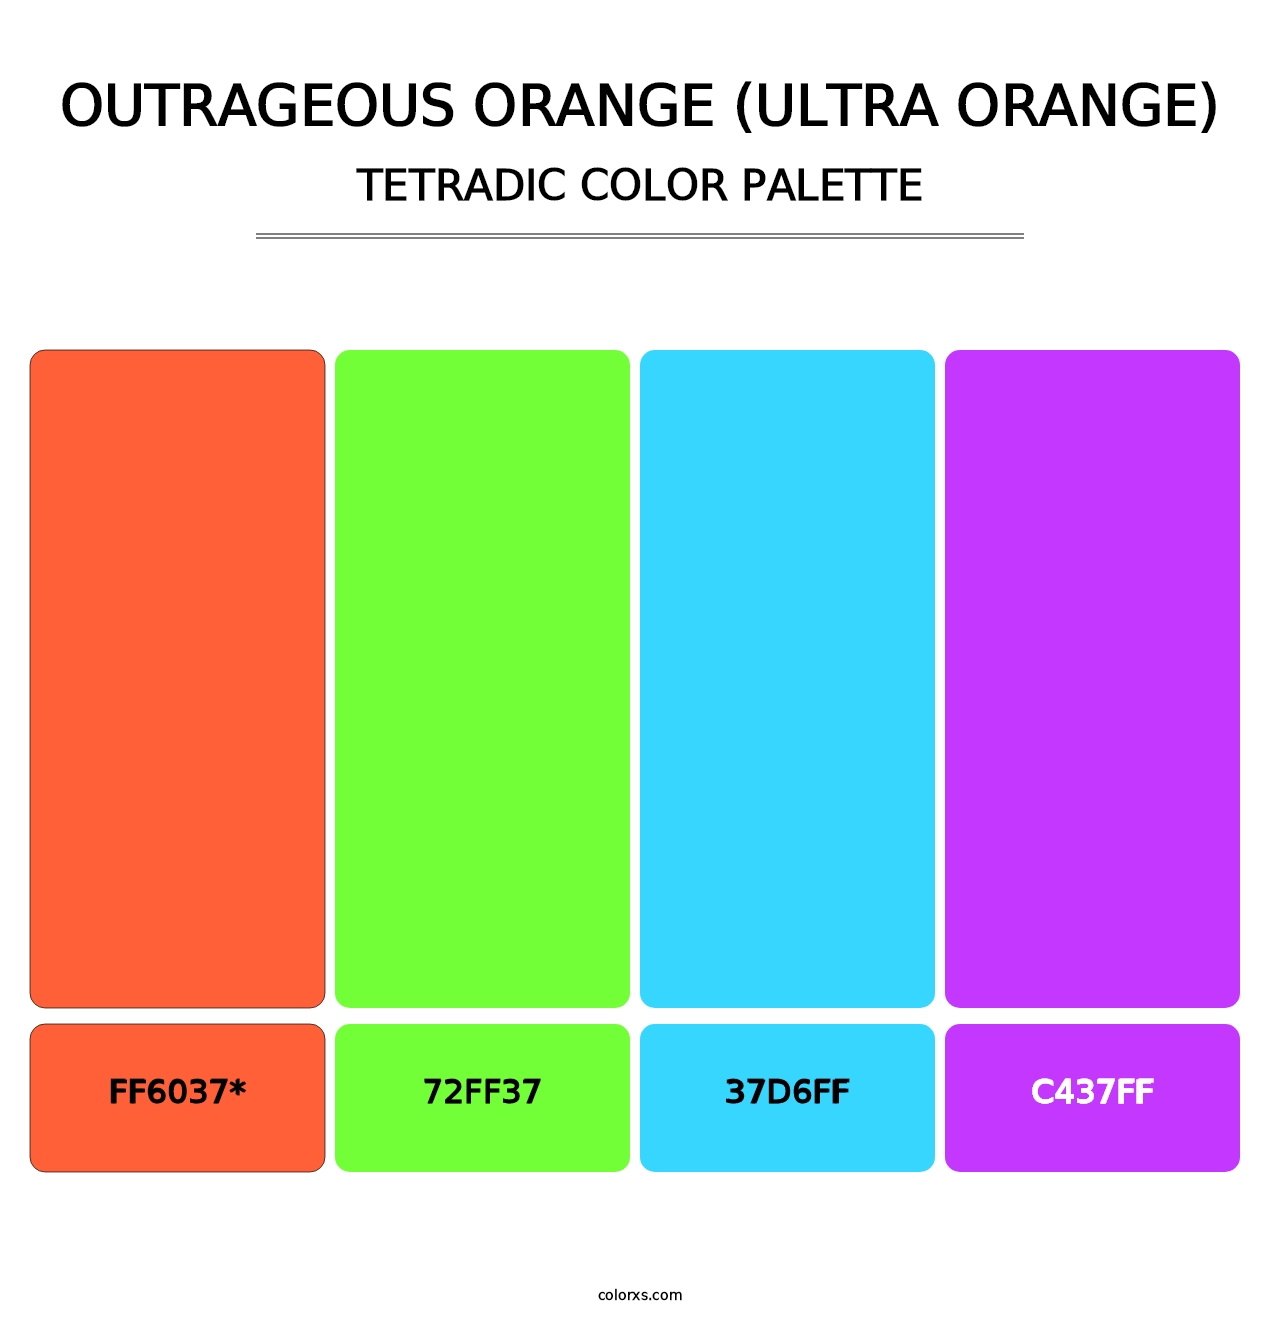 Outrageous Orange (Ultra Orange) - Tetradic Color Palette